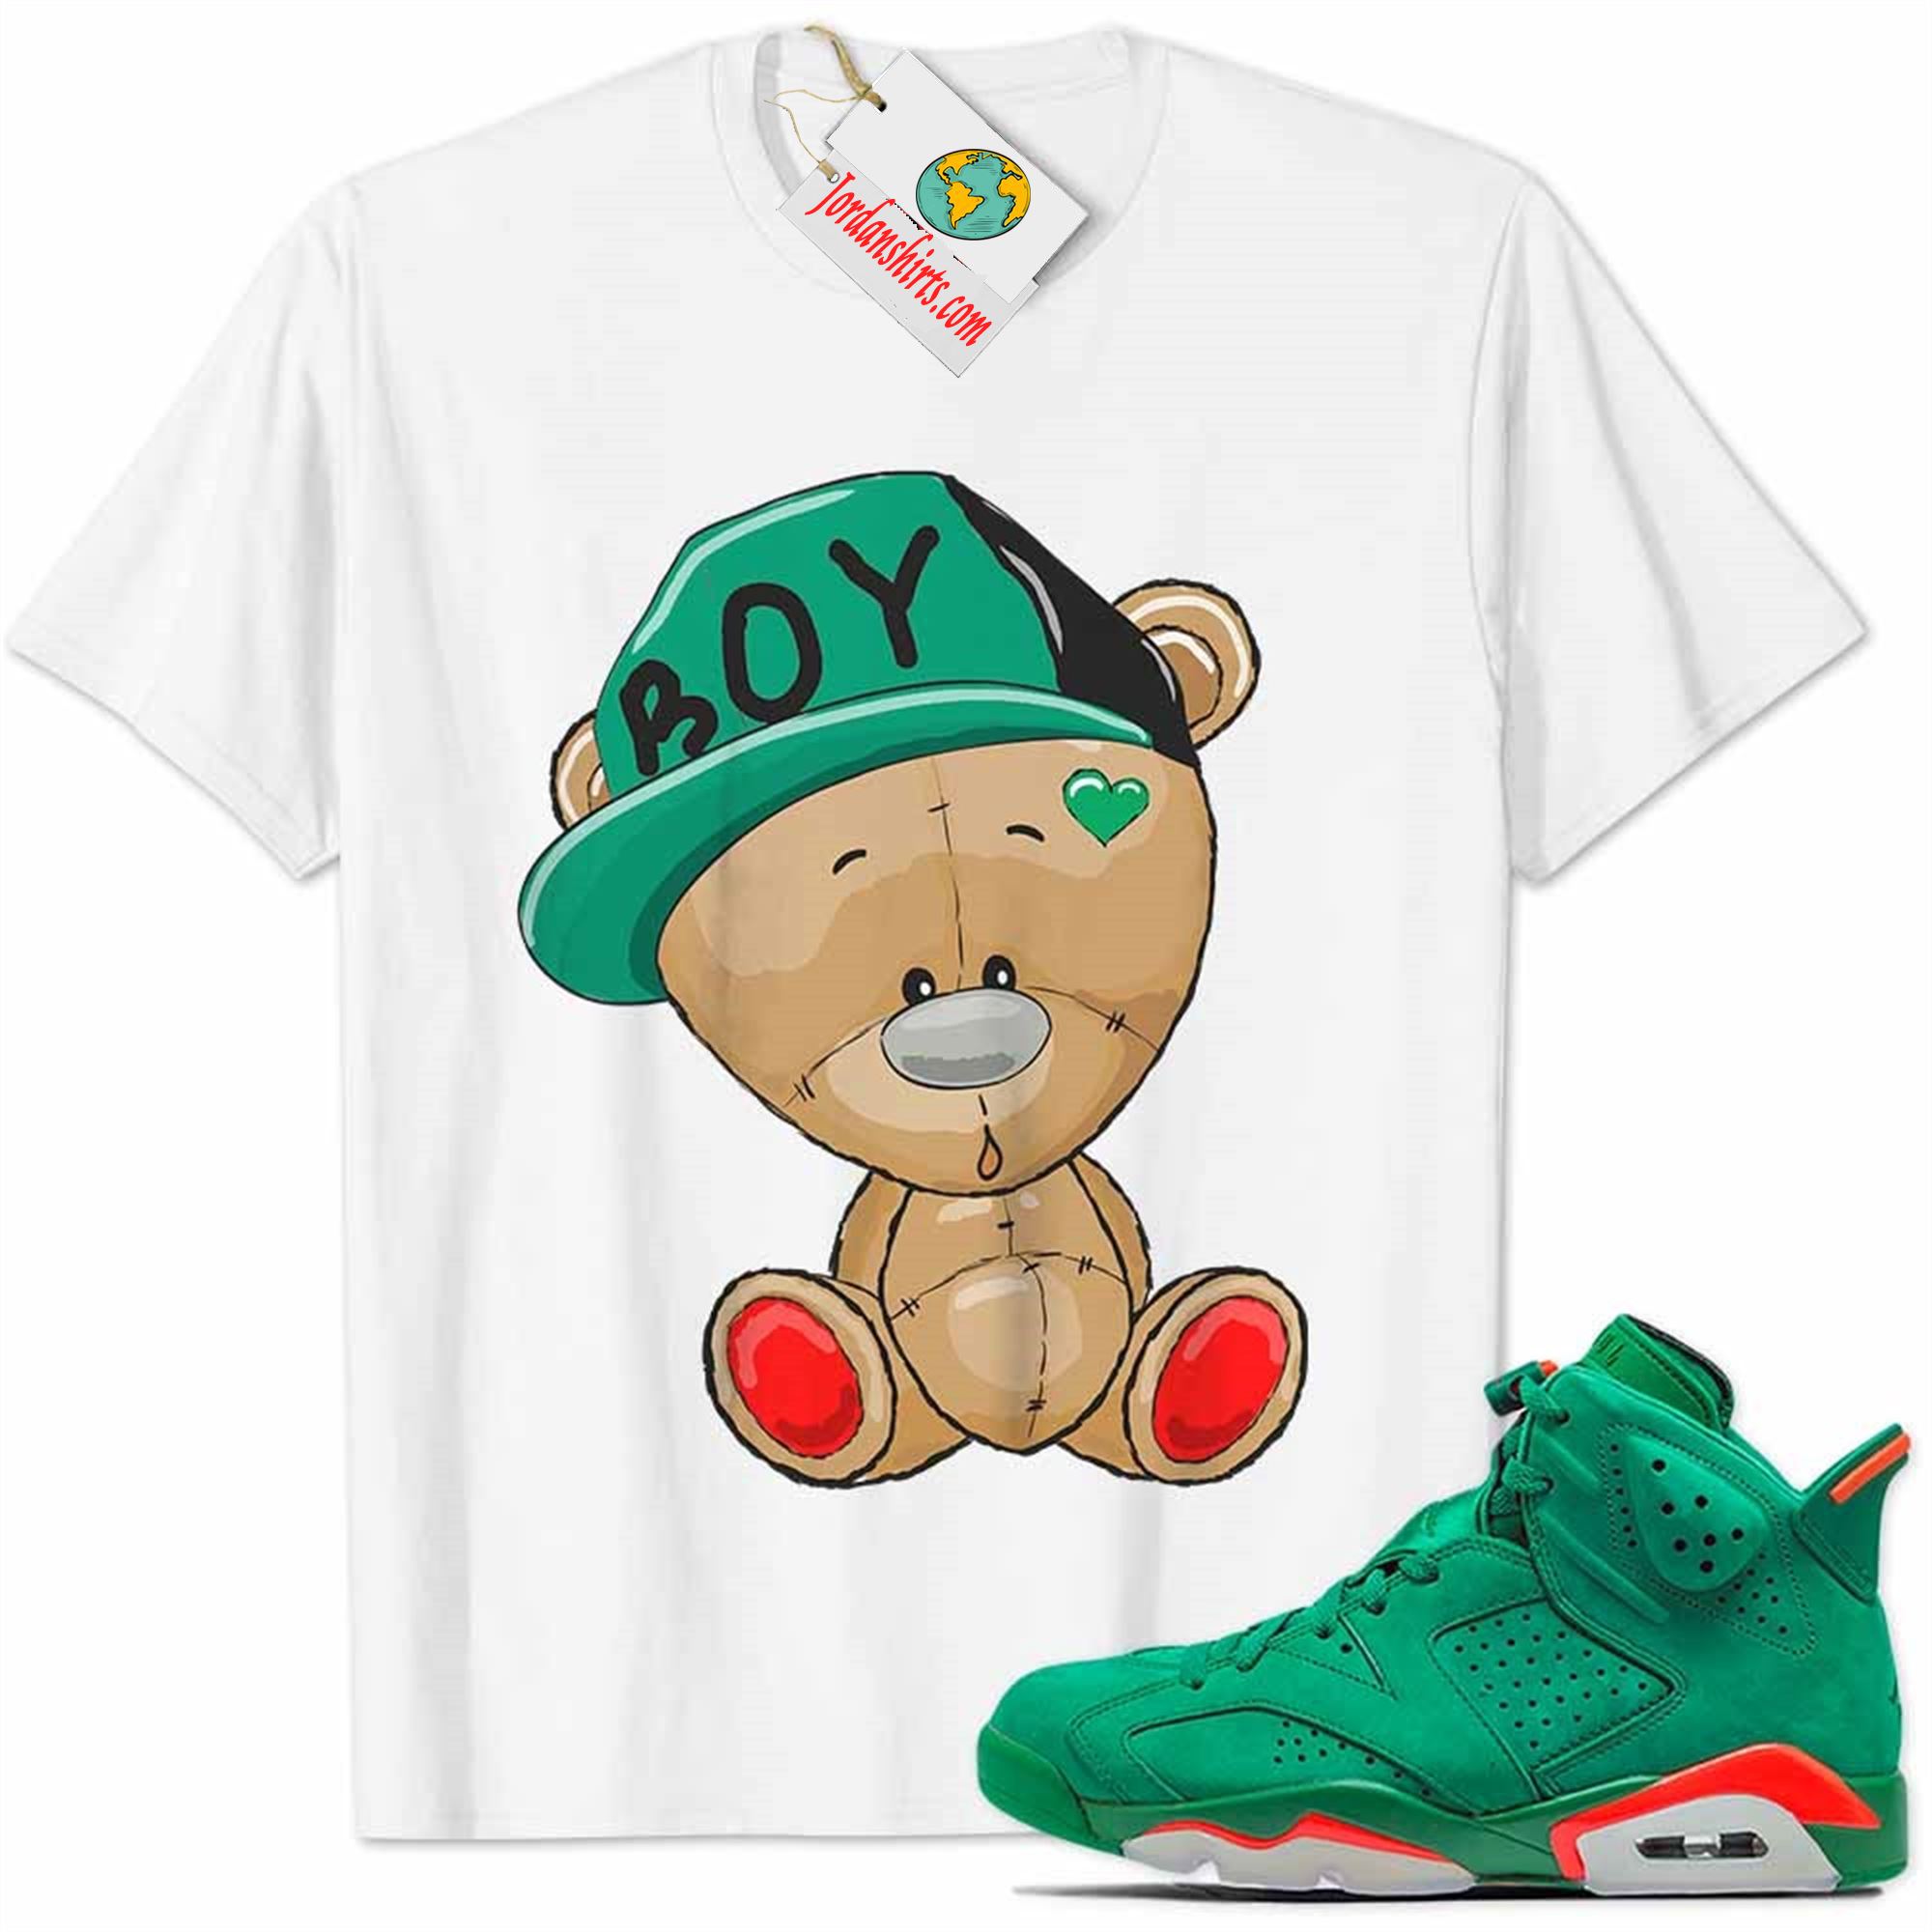 Jordan 6 Shirt, Jordan 6 Gatorade Shirt Cute Baby Teddy Bear White Plus Size Up To 5xl